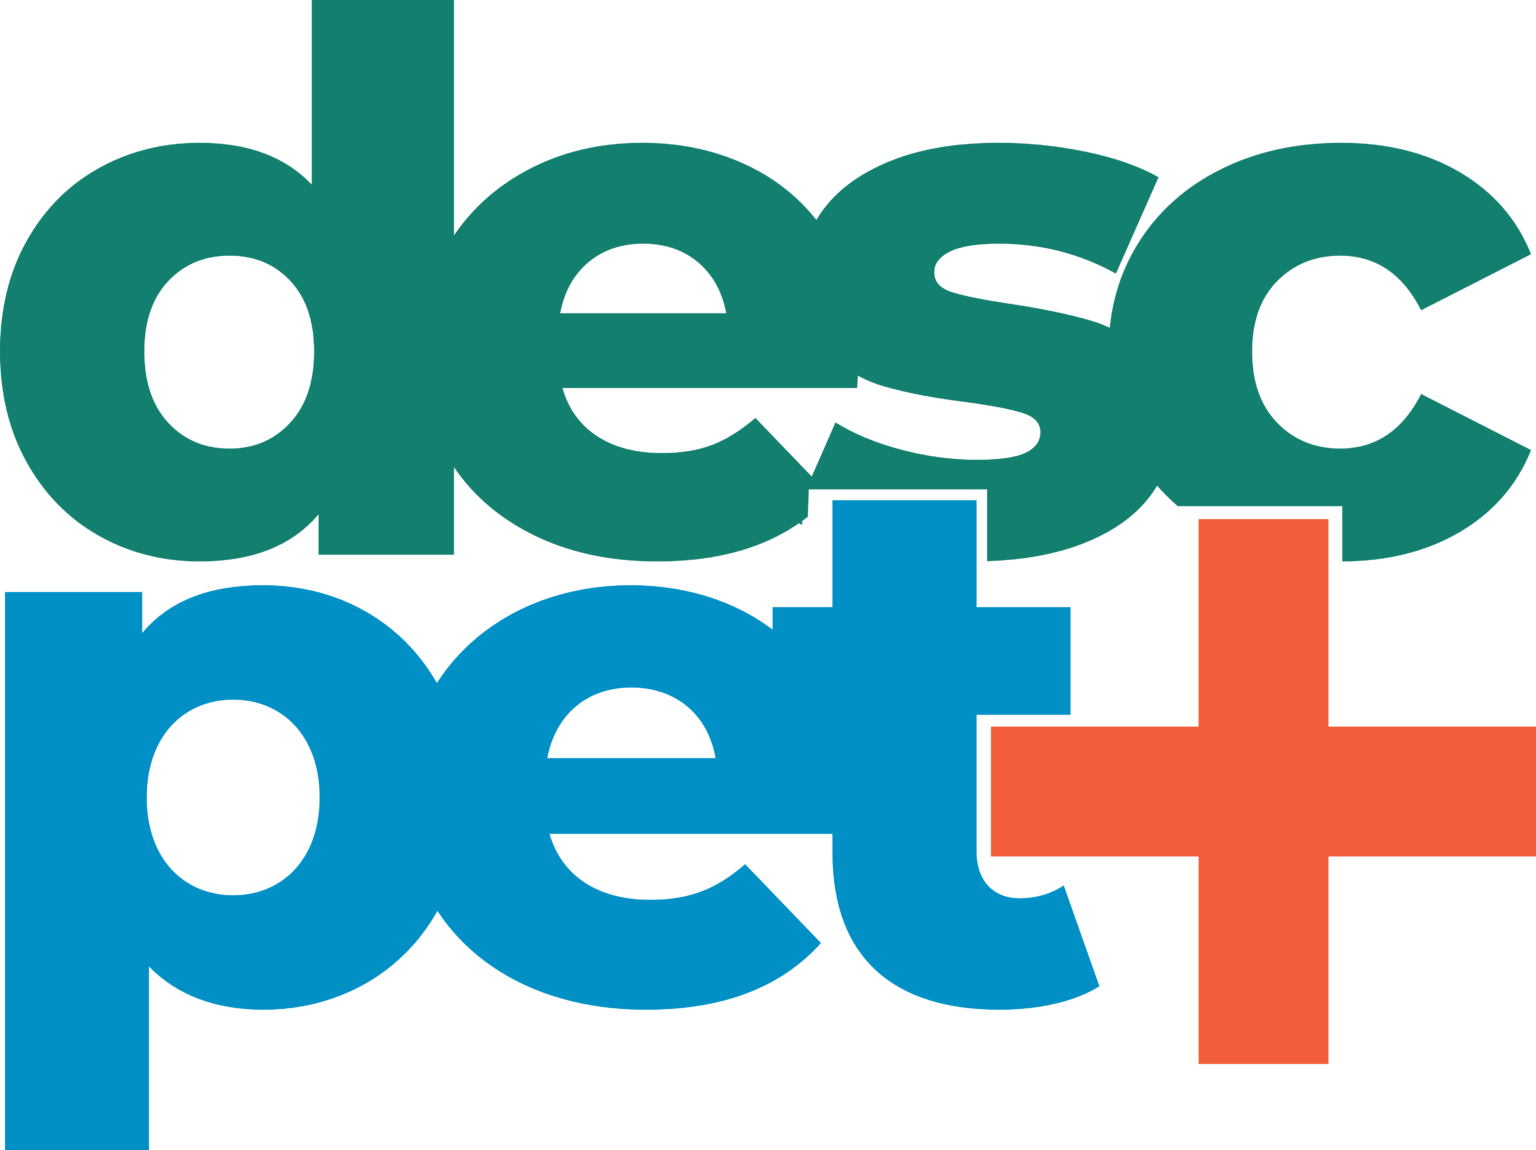 Logotipo-Descpet_PNG_DOREARTES.-1536x1150-1.png